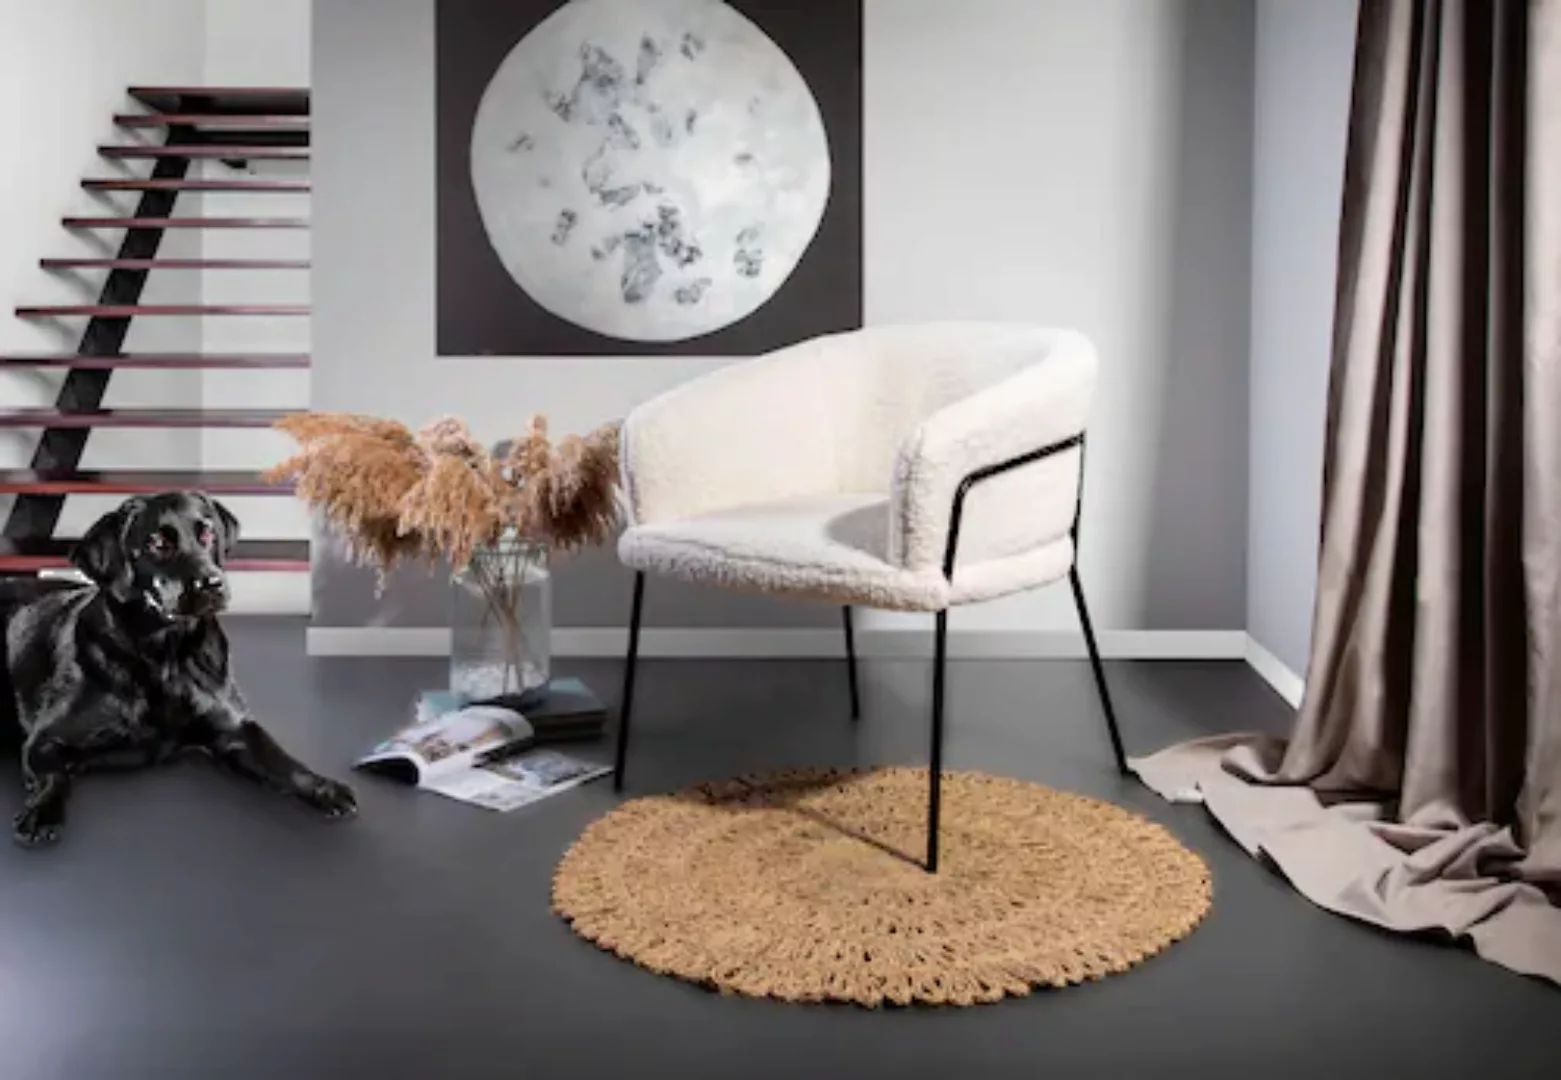 Gutmann Factory Sessel "Winchester", mit modernem Teddyfell Bezug günstig online kaufen